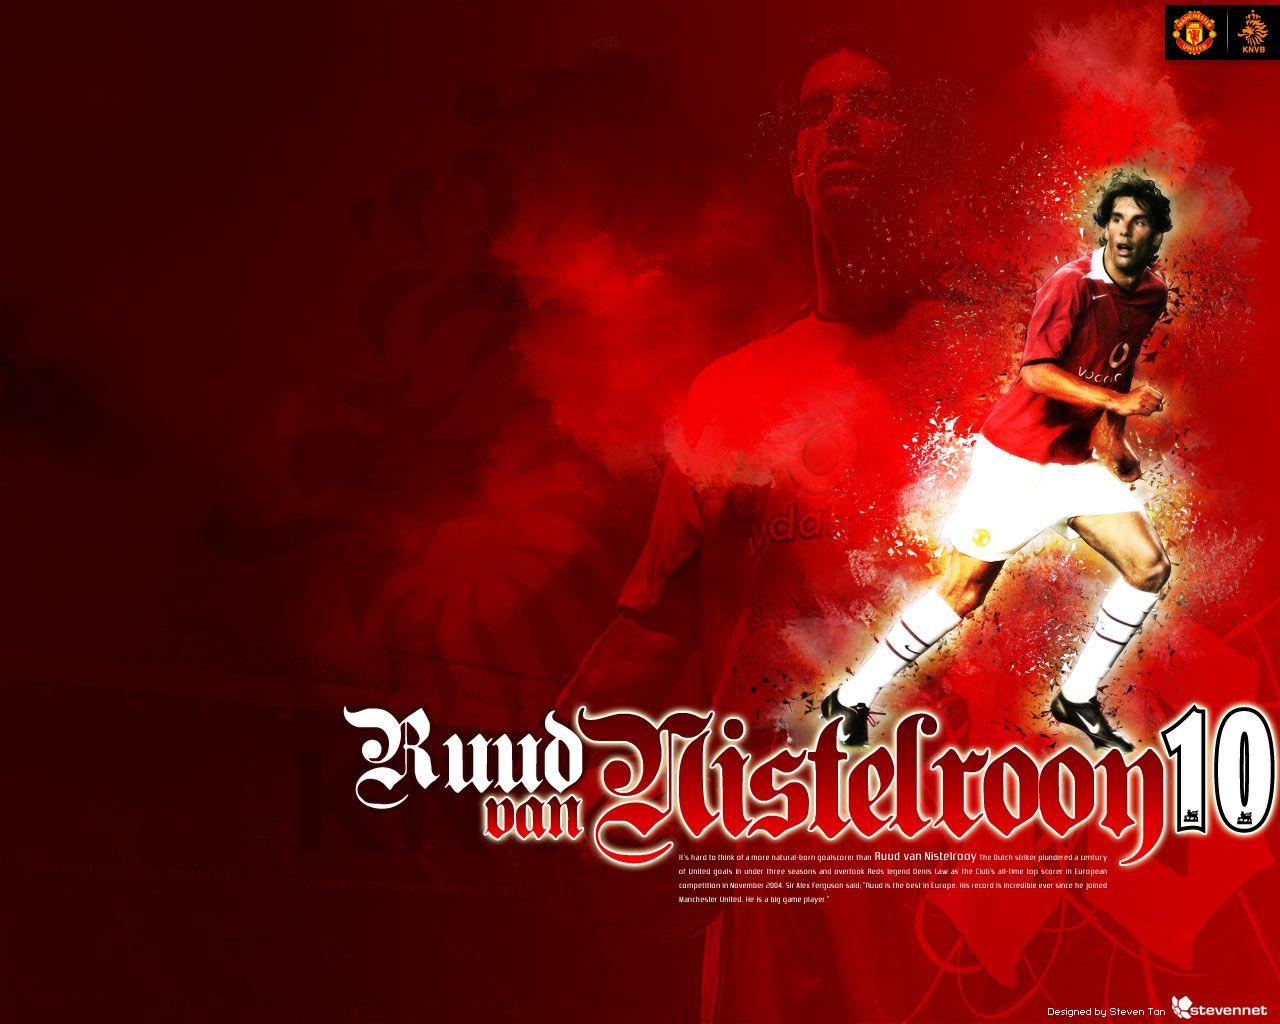 Ruud Van Nistelrooy Biography and Wallpaper. Football Players